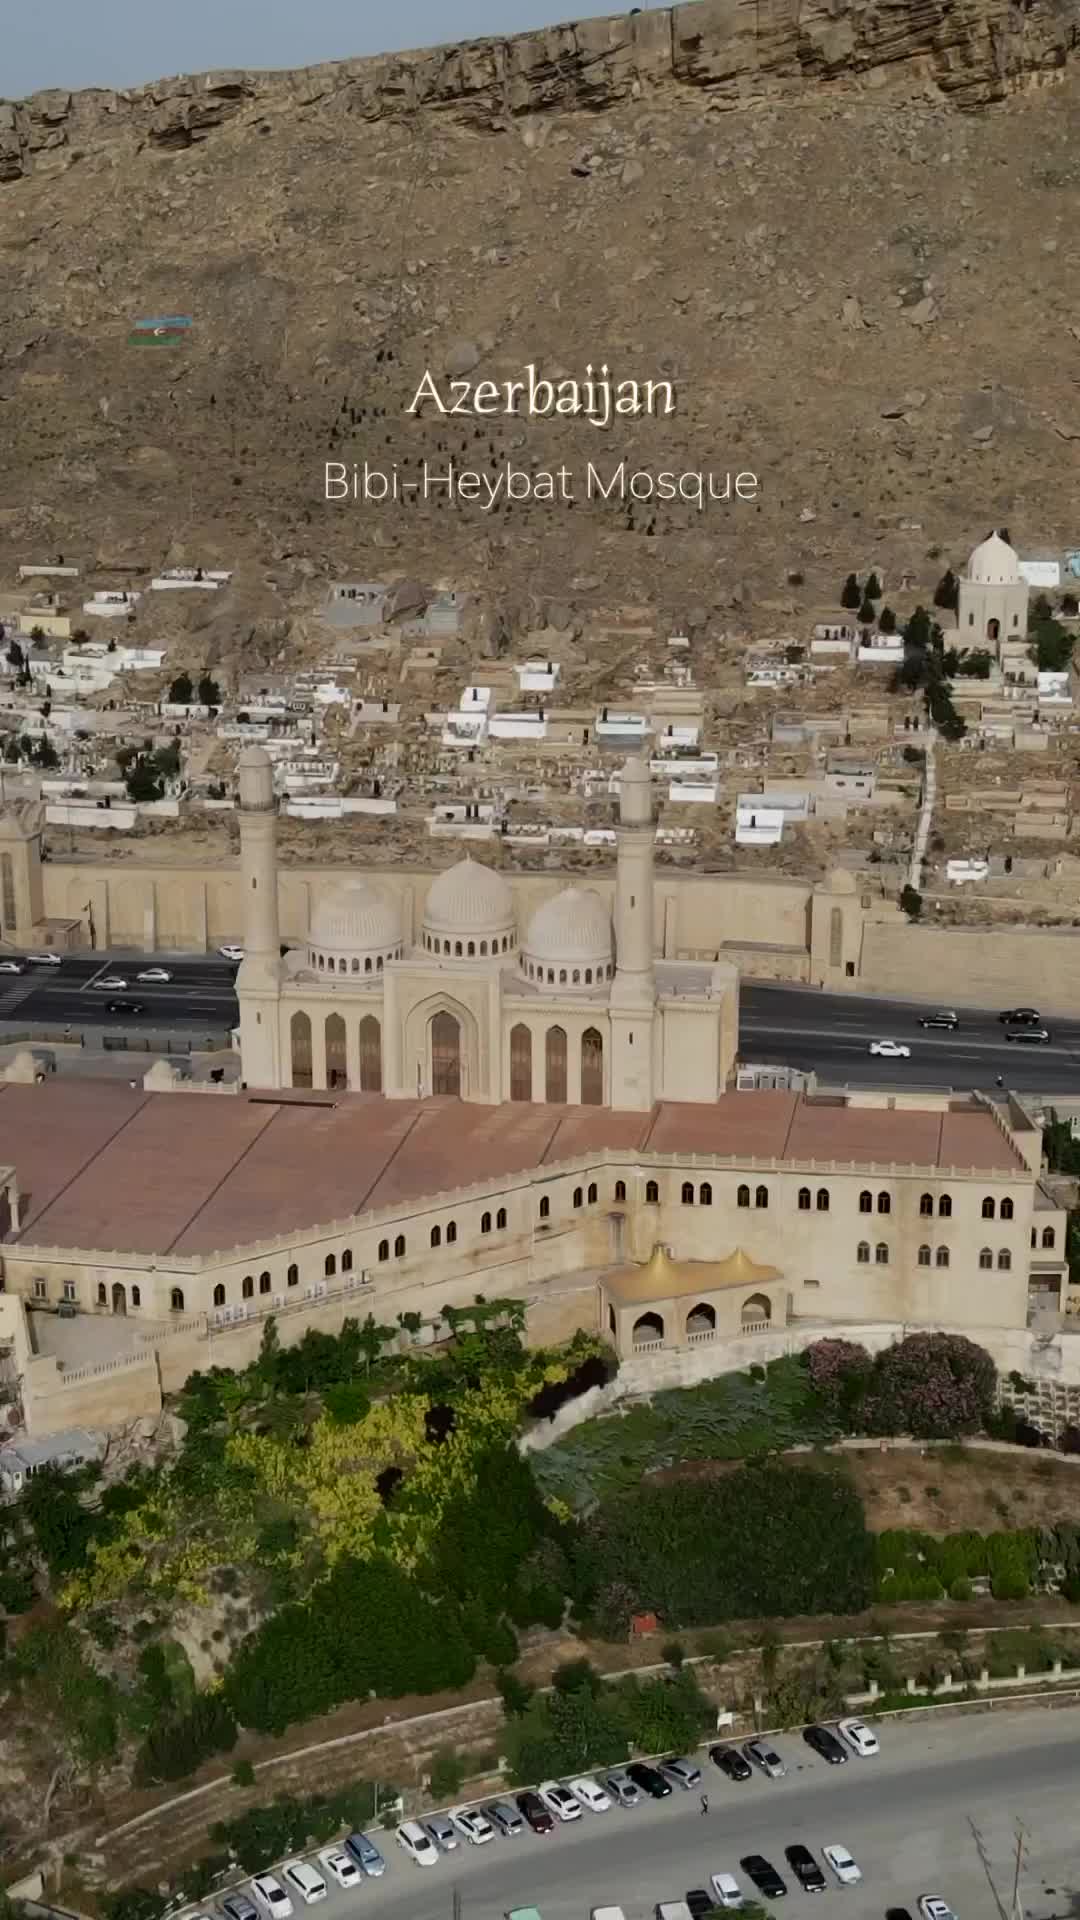 Explore the Majestic Bibi-Heybat Mosque in Baku